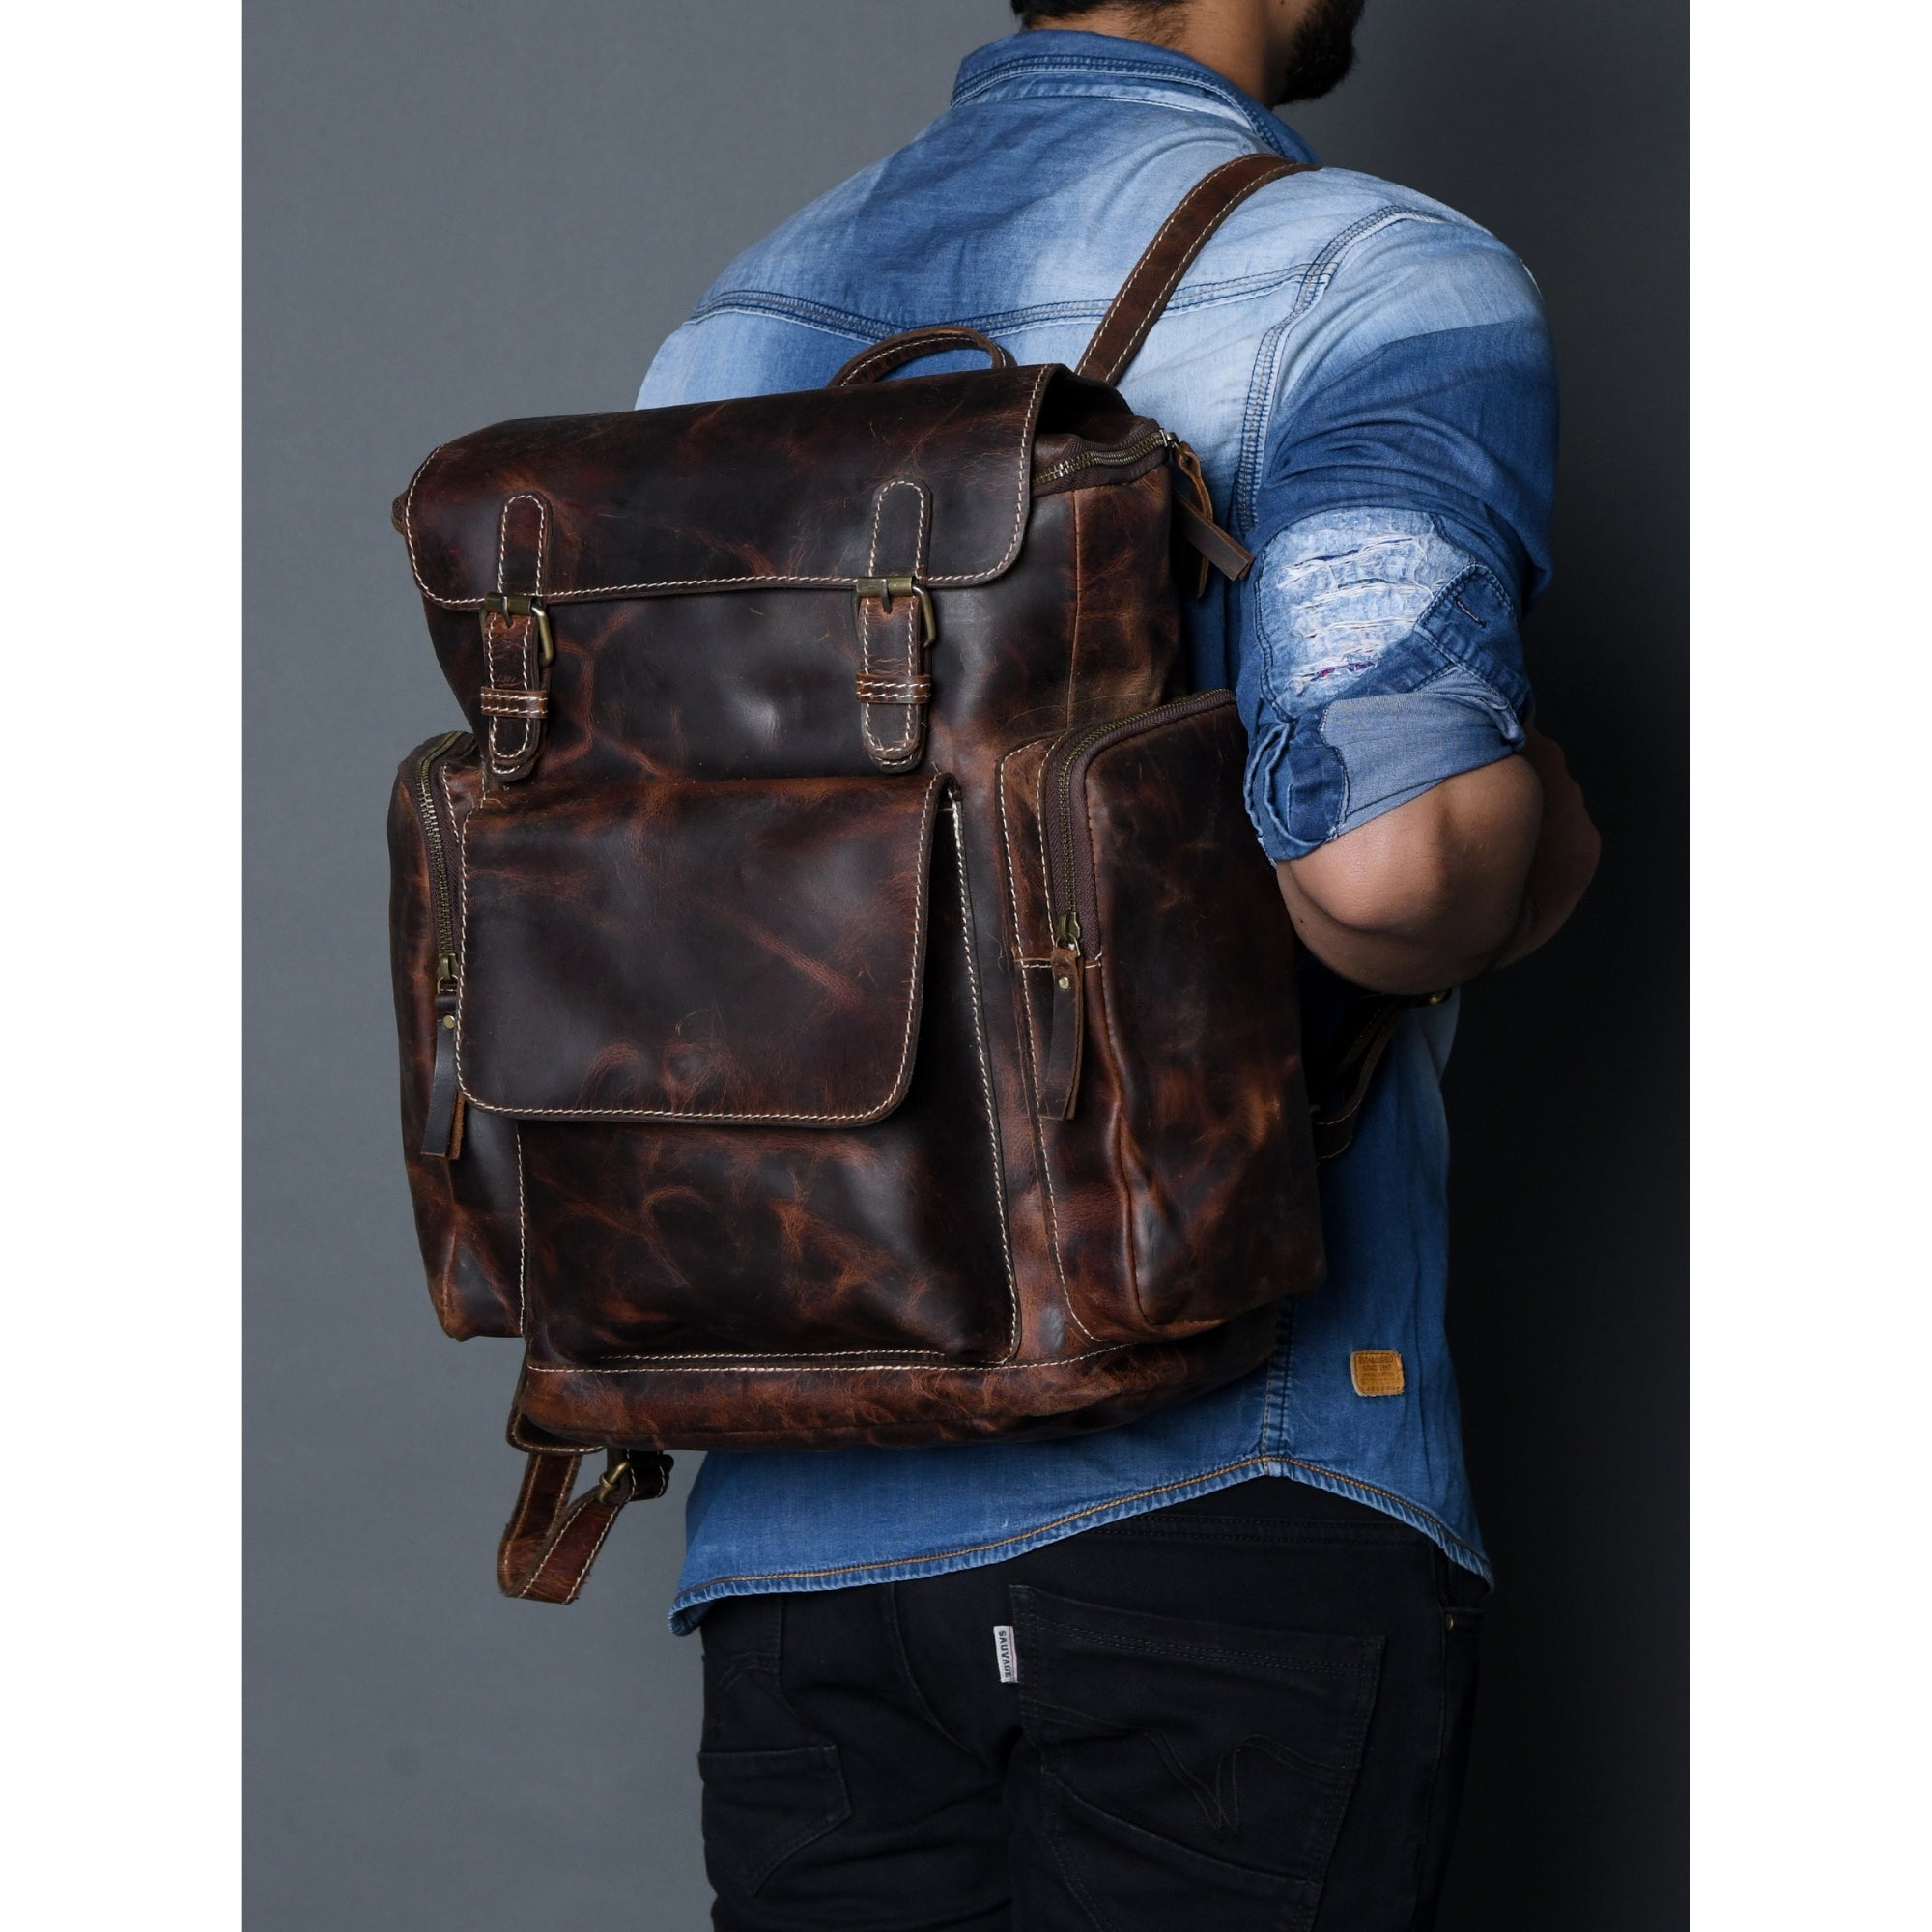 Rucksack Brown Leather Backpack